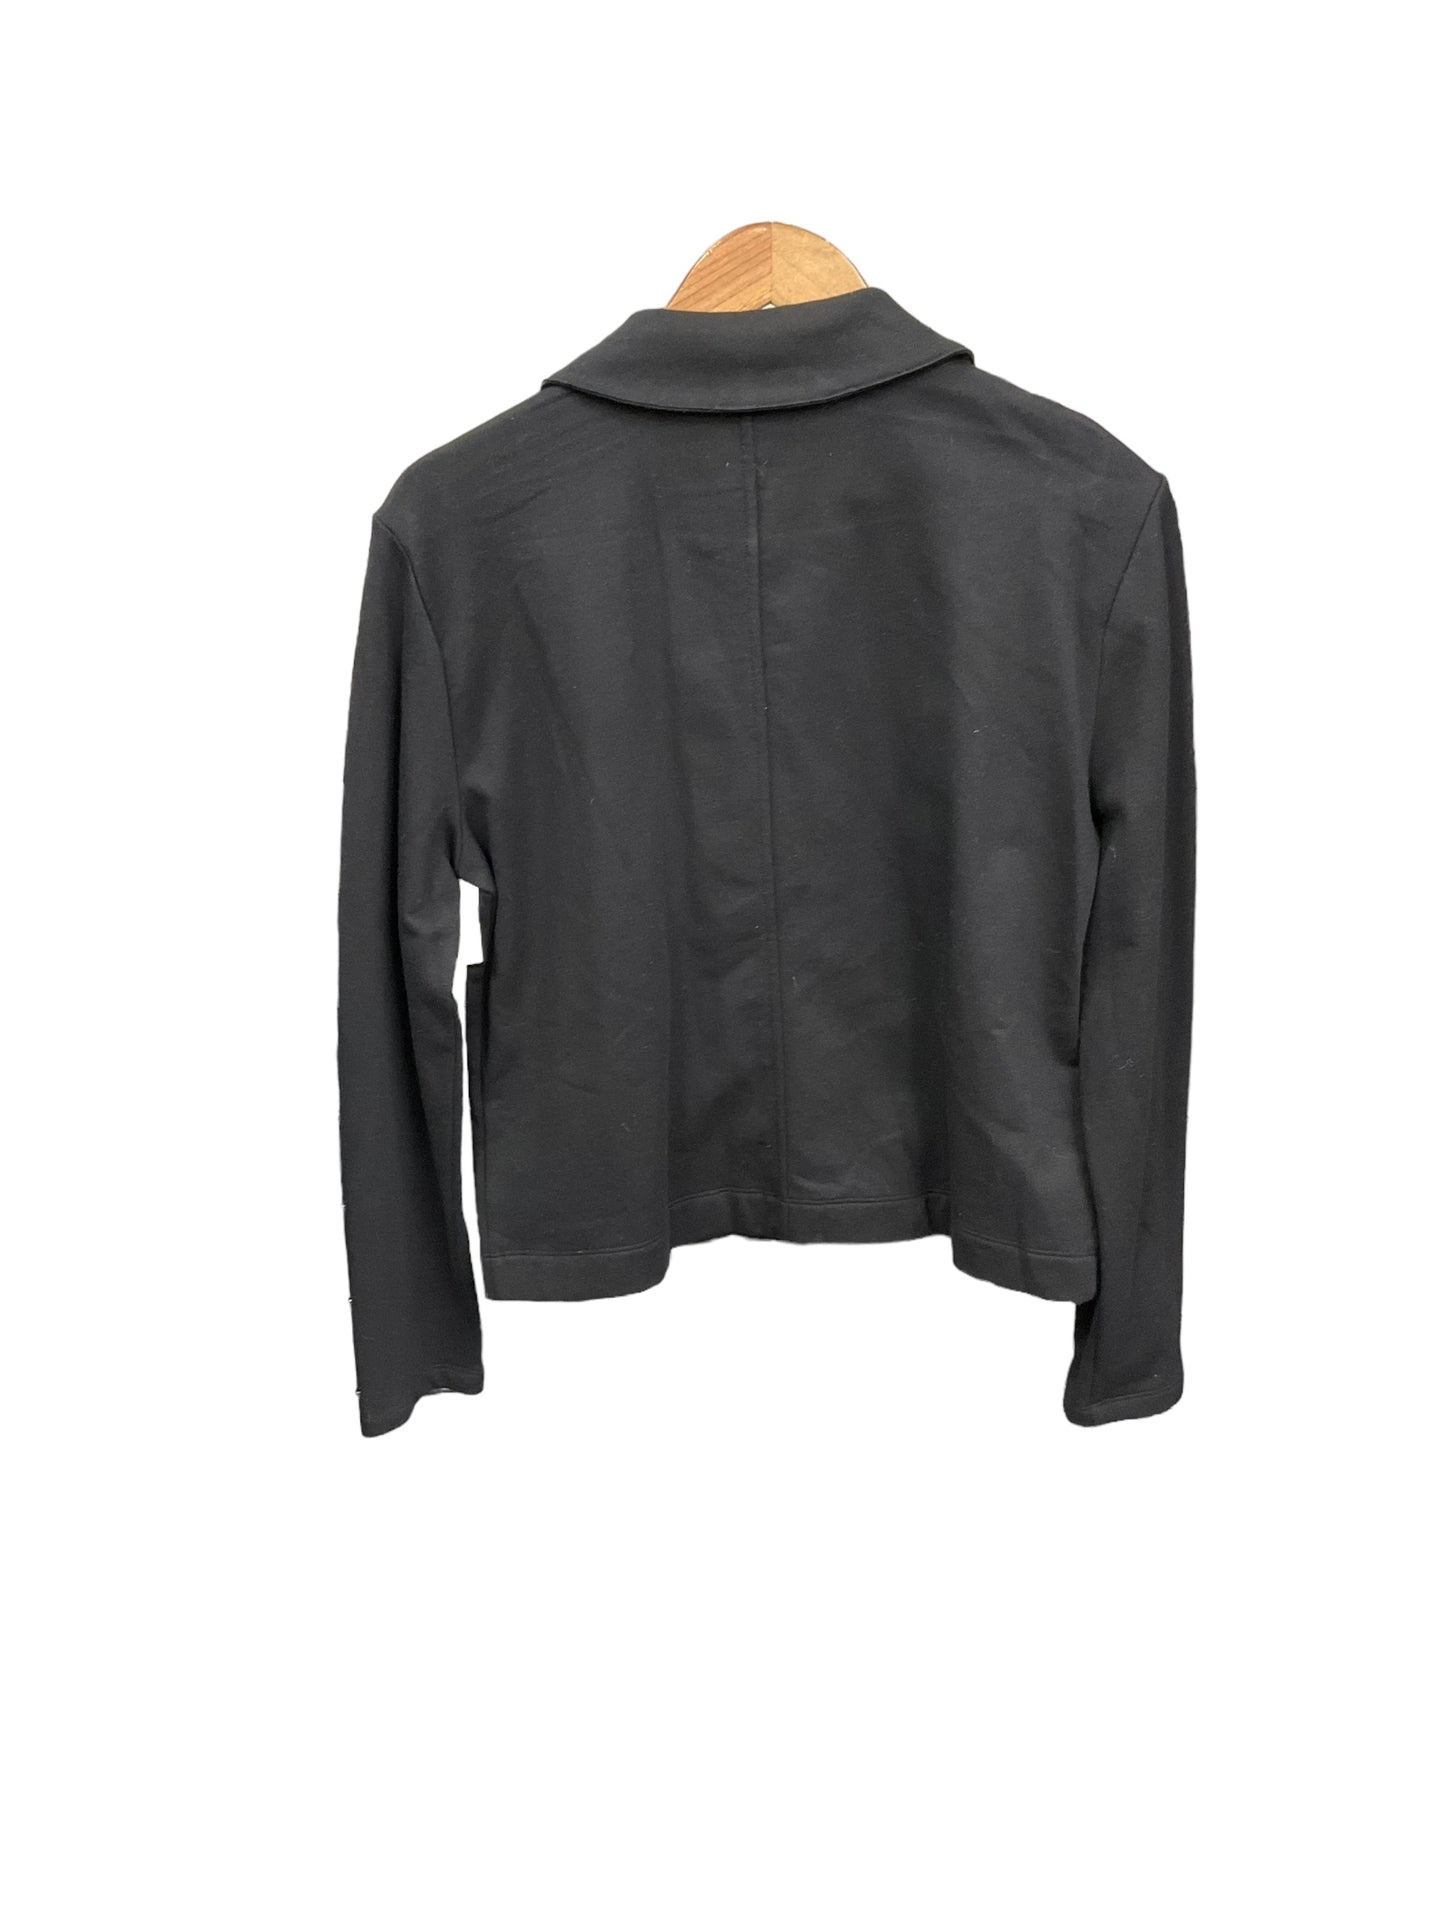 Jacket Moto By Michael By Michael Kors  Size: L